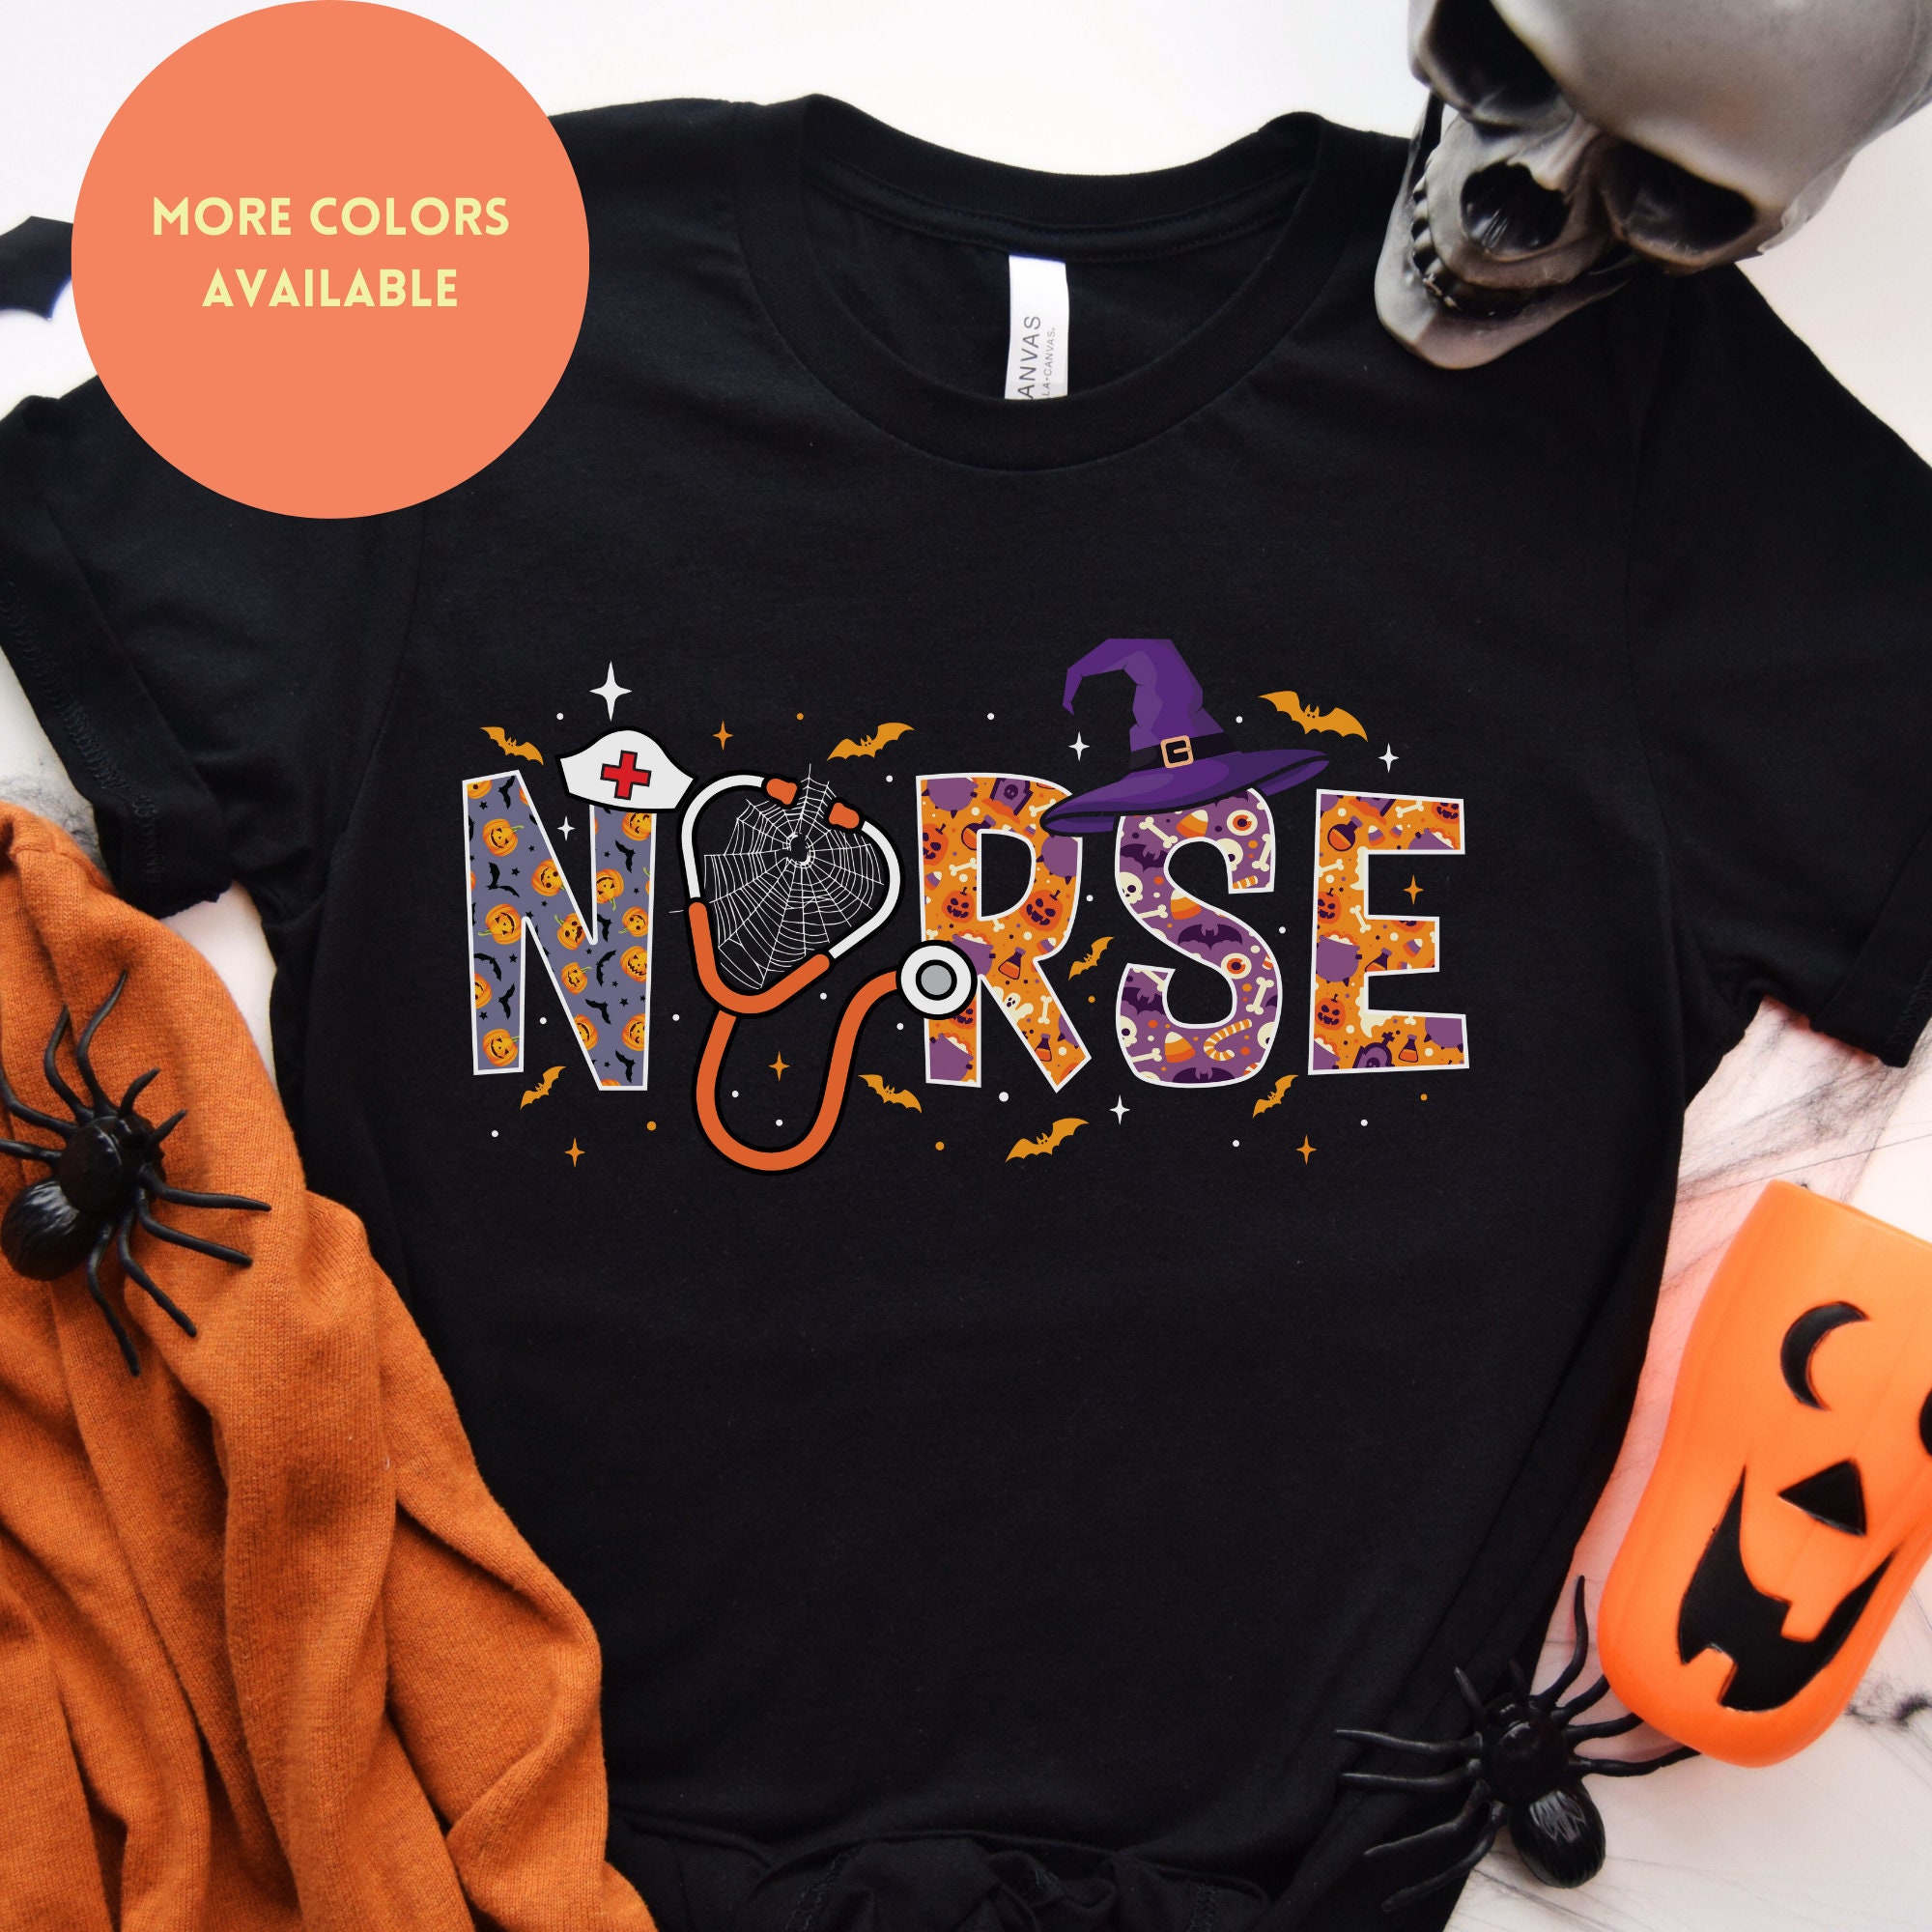 Discover Spooky Nurse Shirt, Halloween Nurse Shirts, Nurse Shirt, Witch Shirt, Scary Shirt, Halloween Costume, Scary Nurse Top, Nursing Gift, Oct 31.